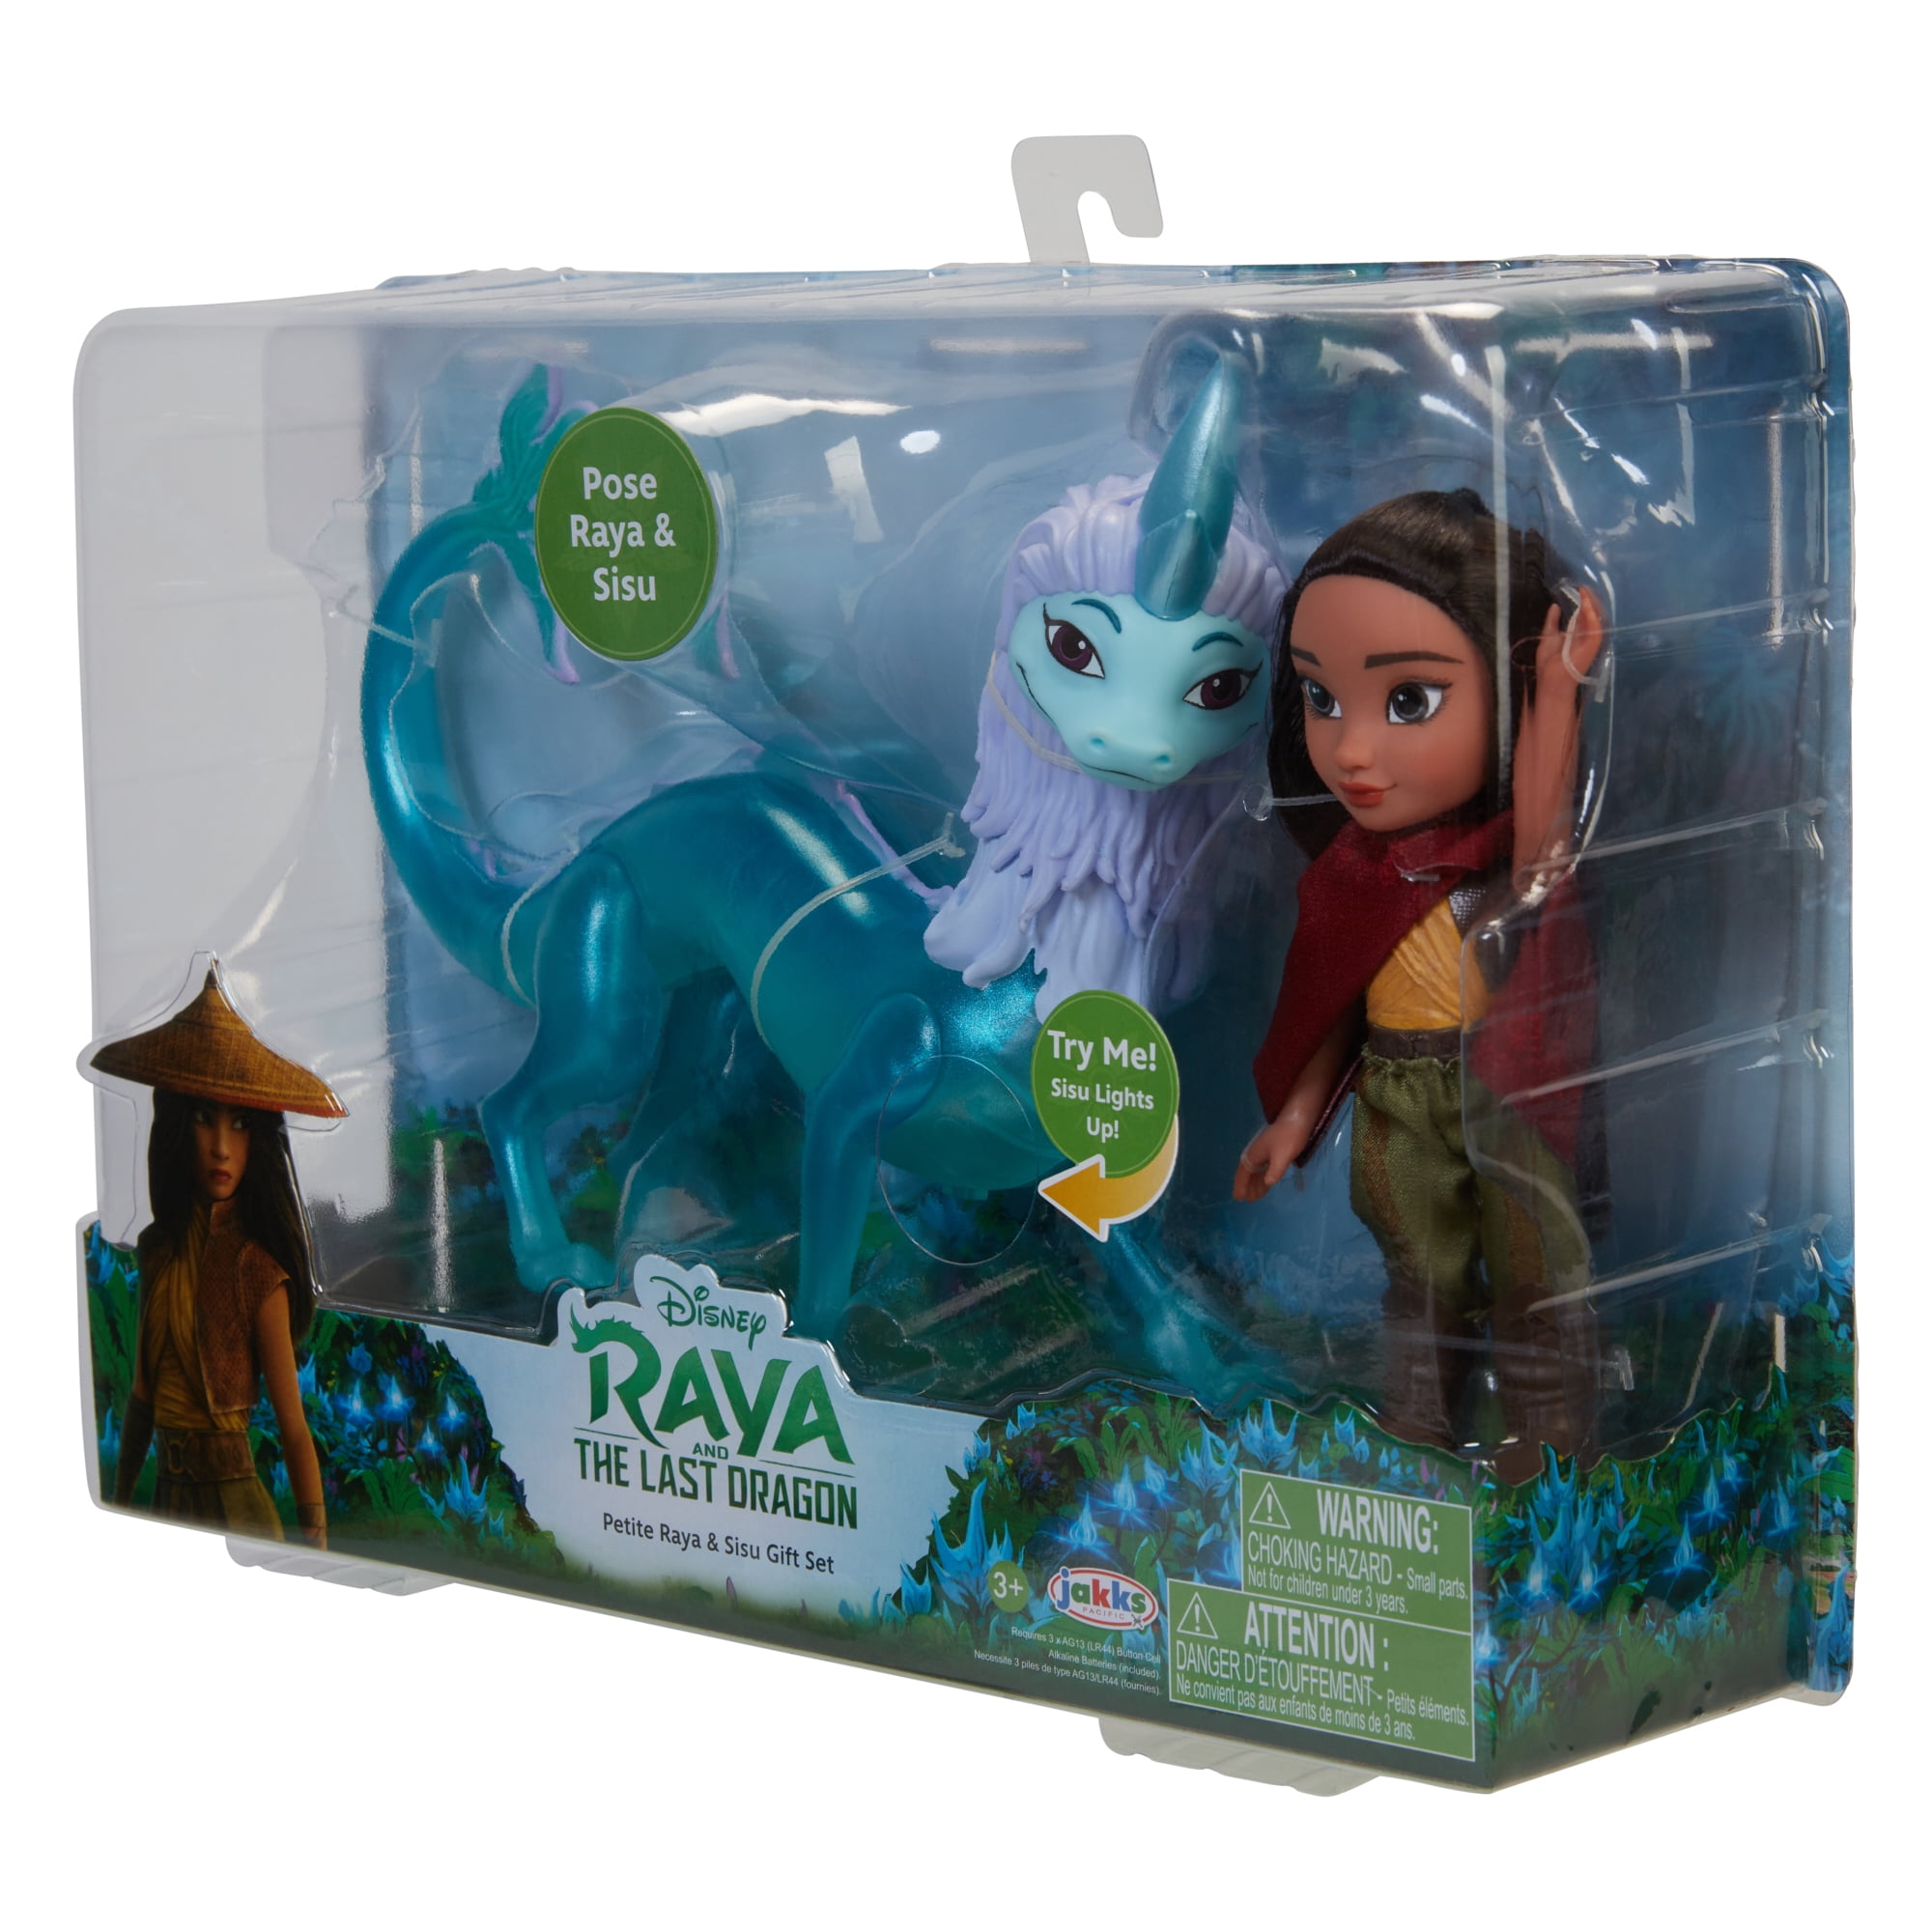 Details about   Disney Raya And The Last Dragon Petite Raya Doll Kids Gift Set 2021 New 